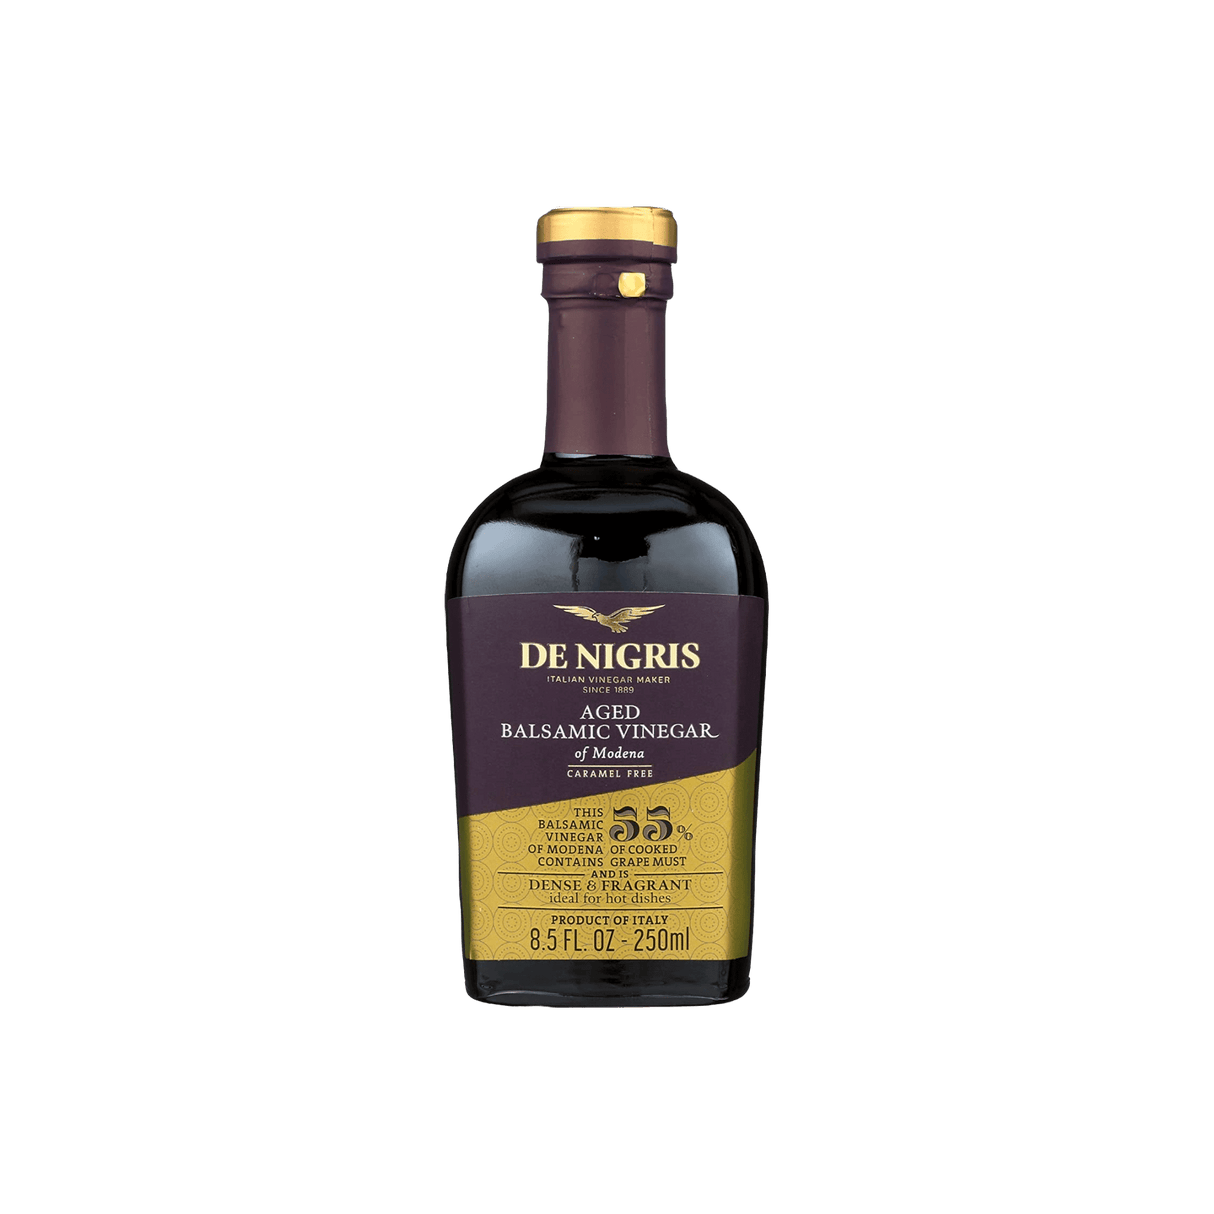 De Nigris Aged Balsamic Vinegar of Modena